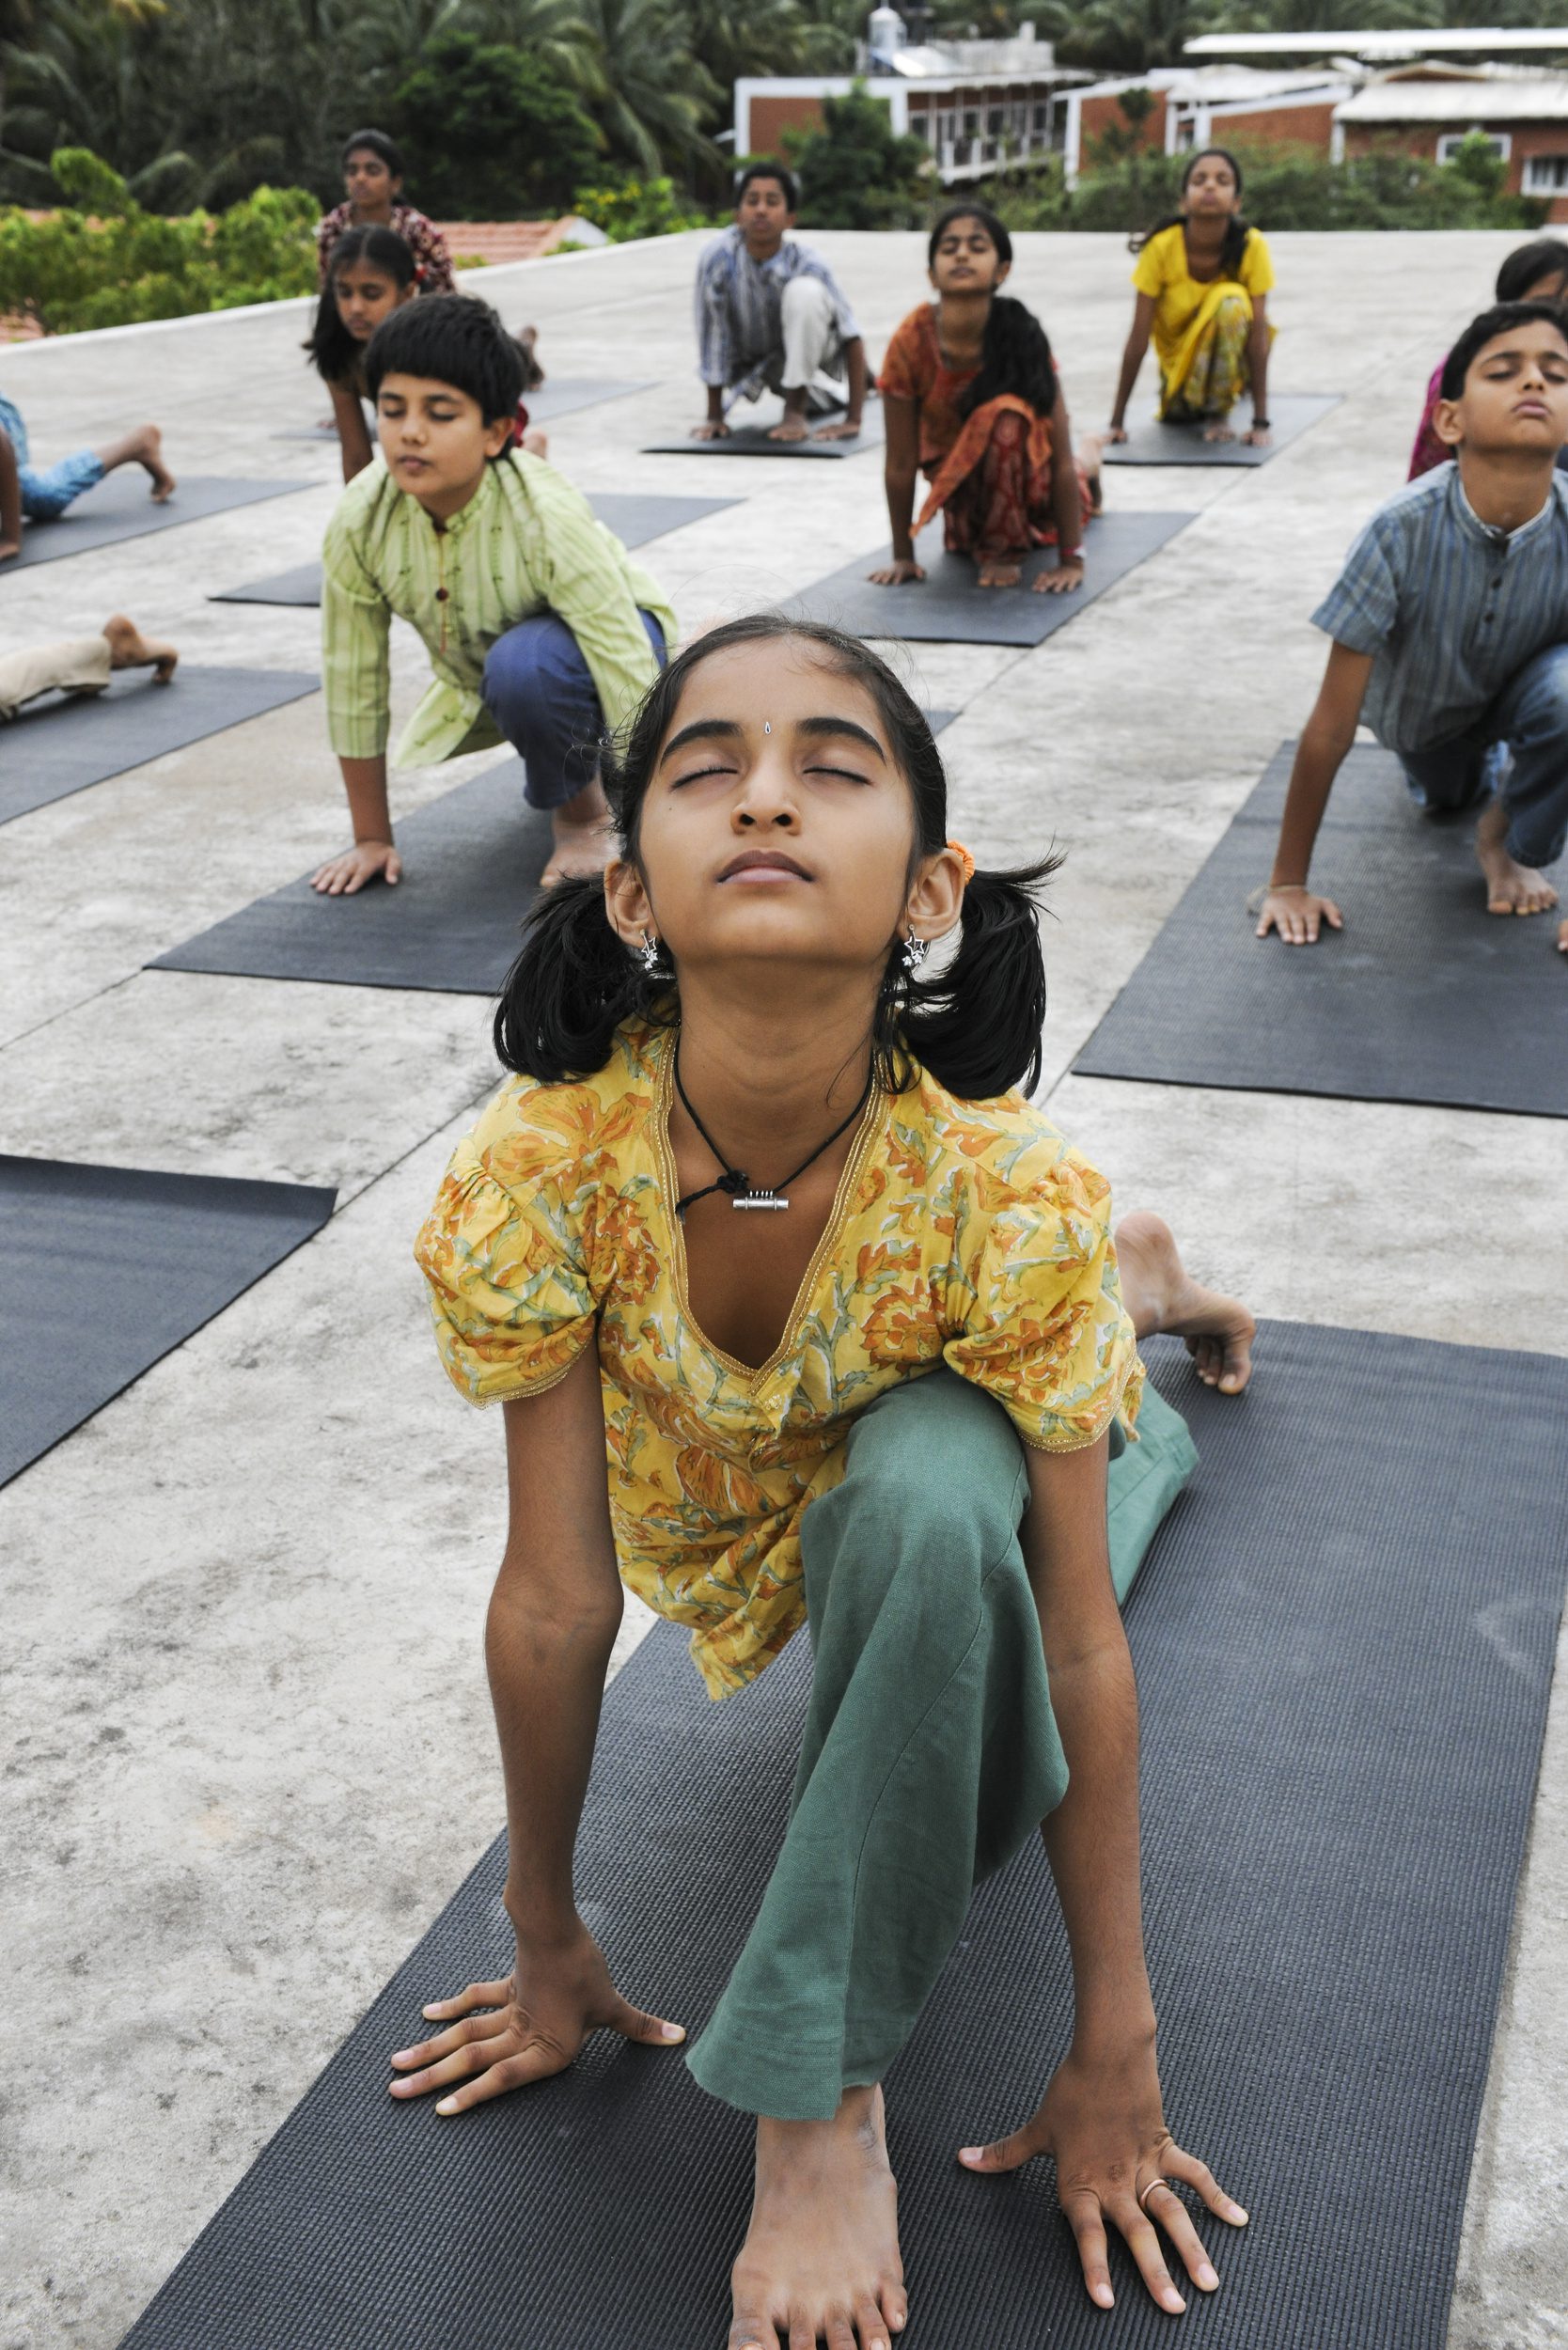 Group of kids doing Surya Shakti ( a yogic practice)